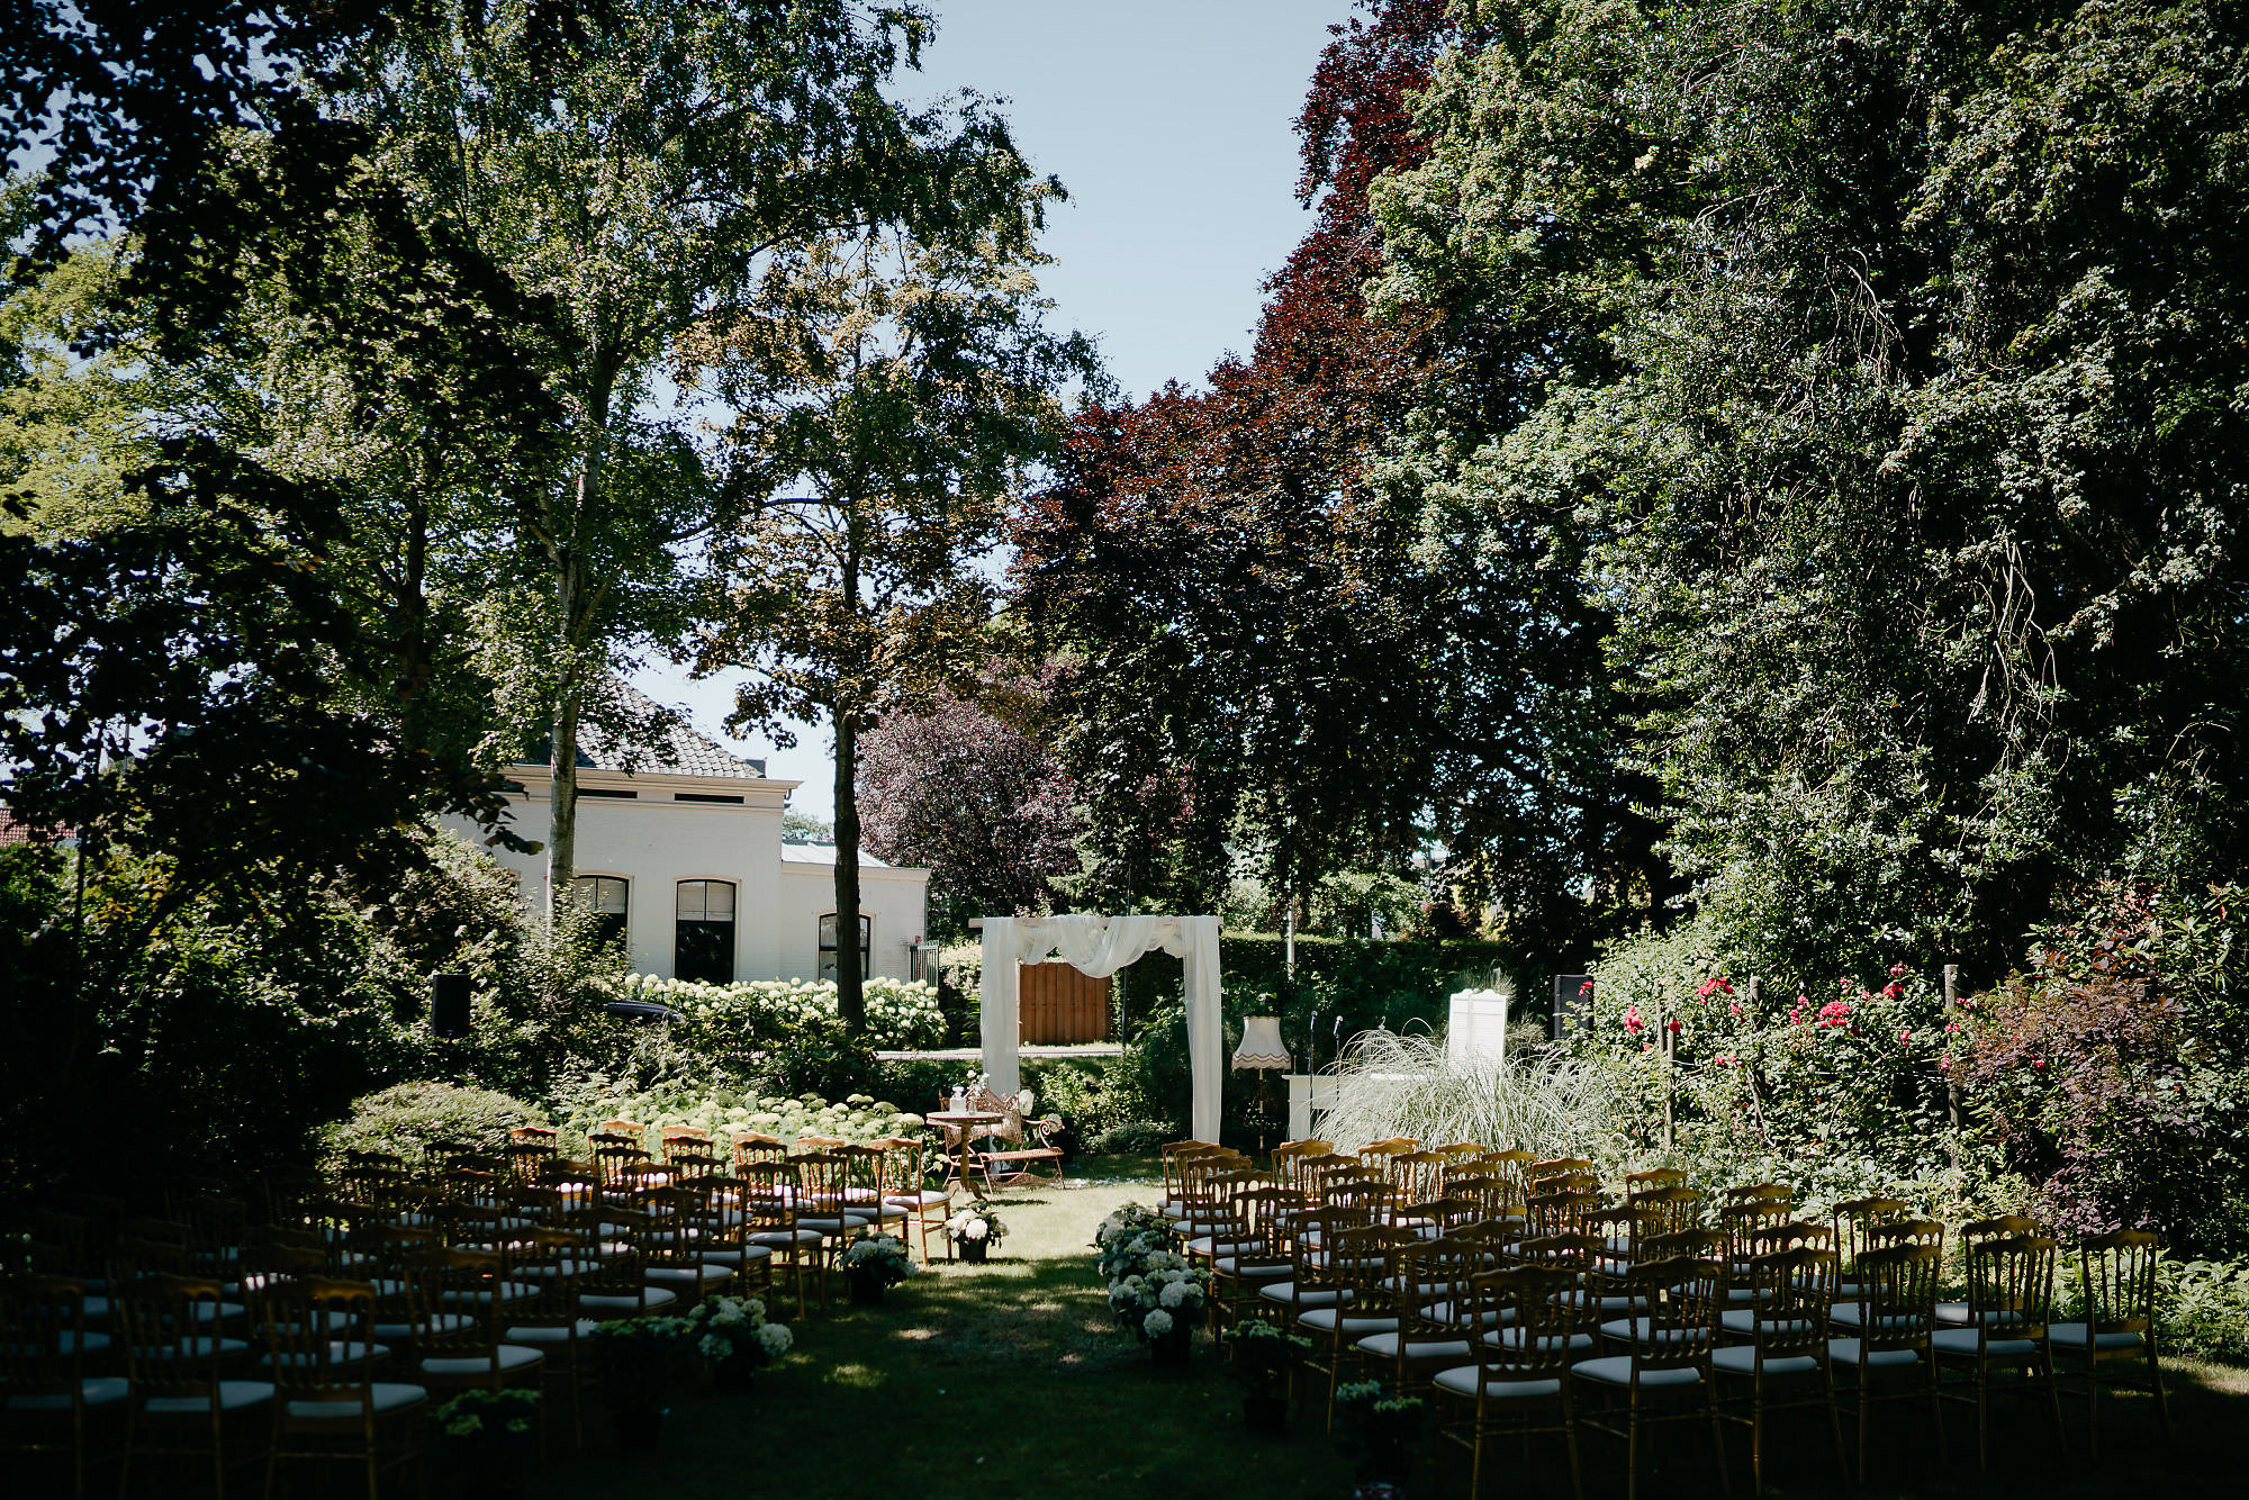 rotterdam wedding in the garden ceremony location by mark hadden amsterdam wedding photographer